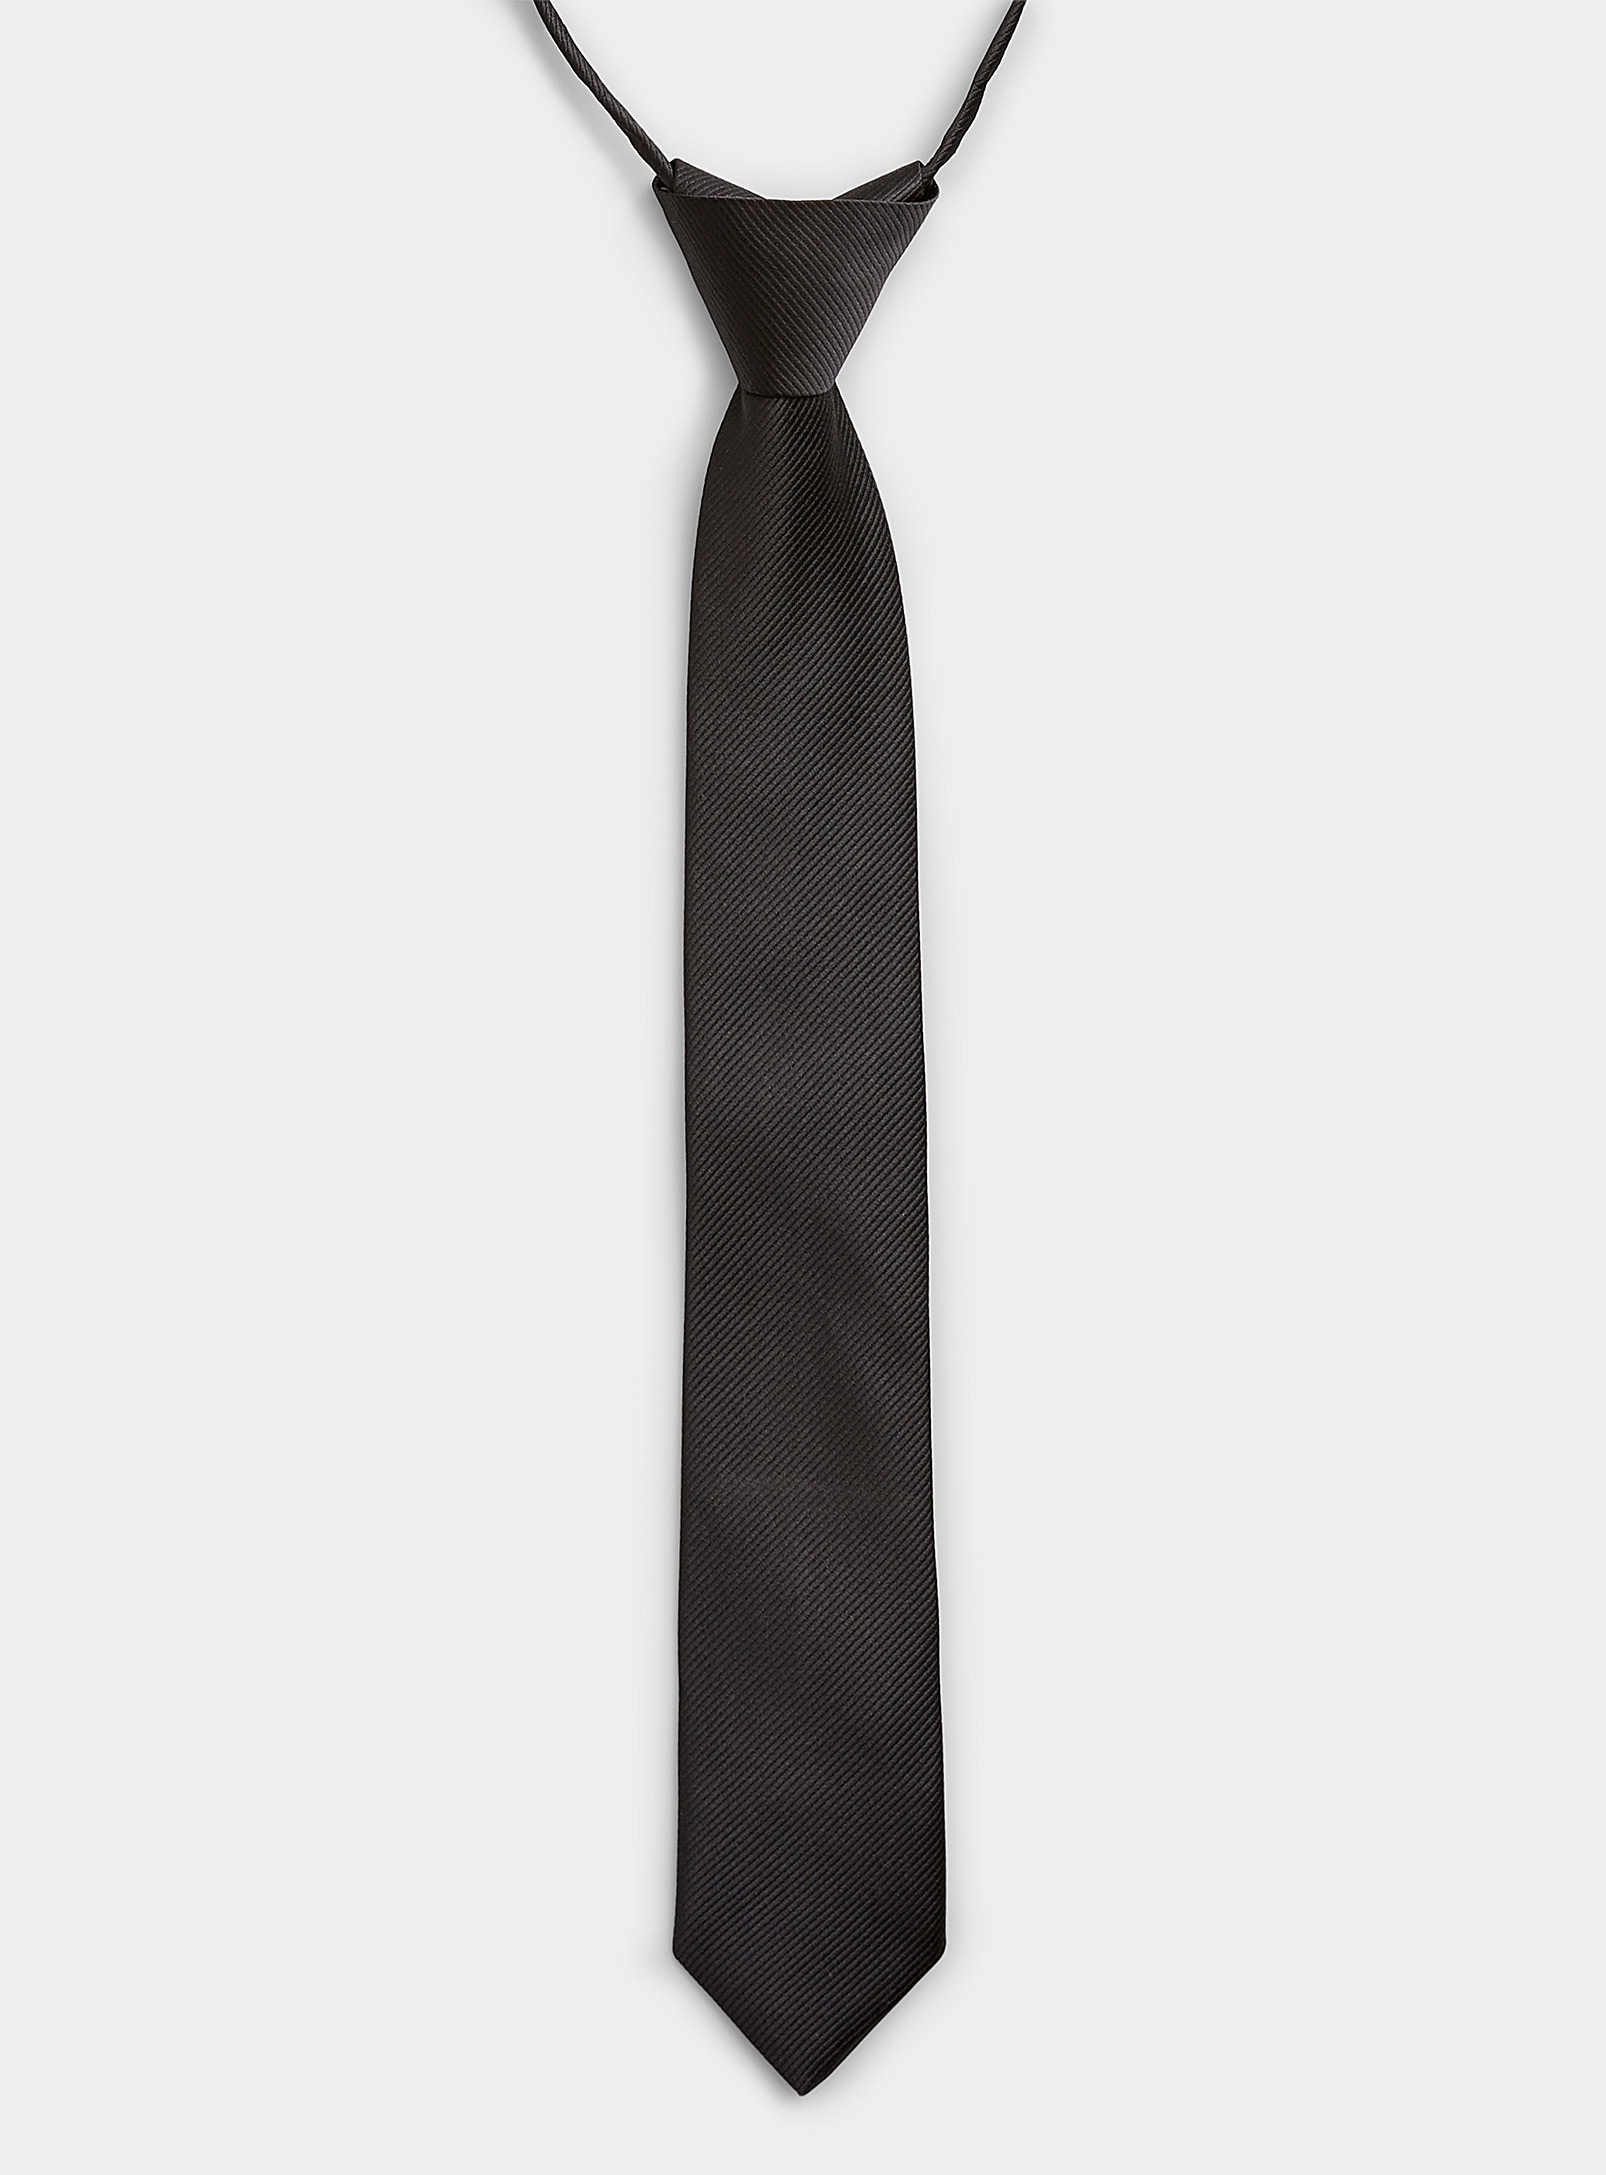 Simons - Women's Pre-tied black tie